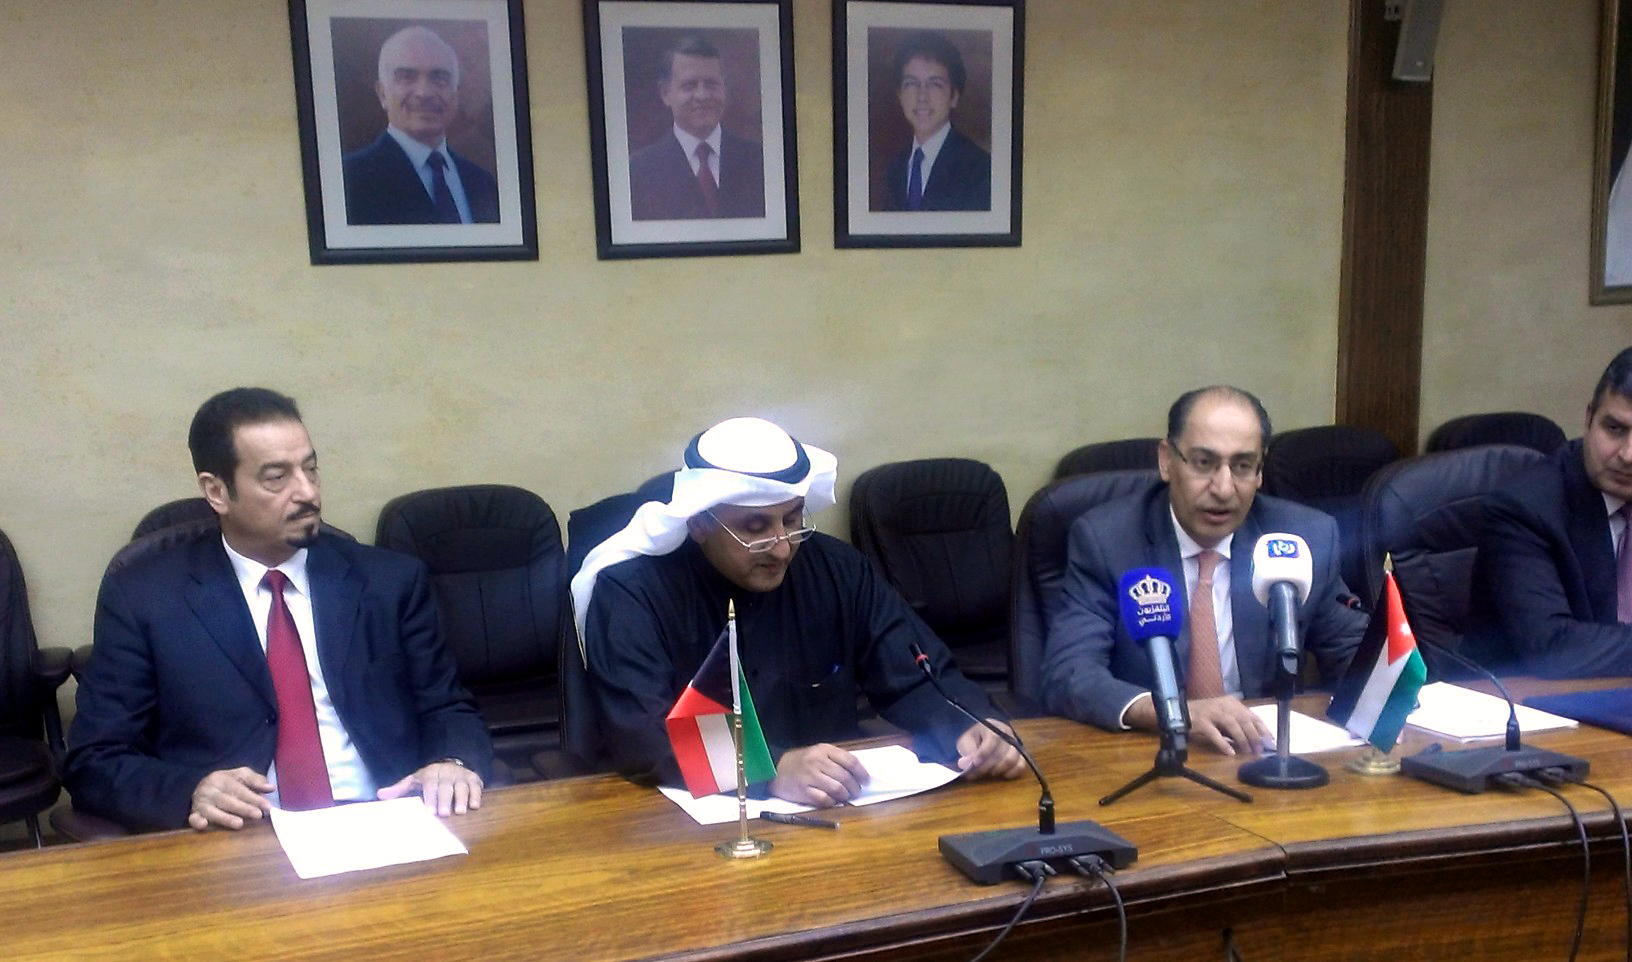 Kuwait Fund for Arab Economic Development (KFAED) signes the donation agreement